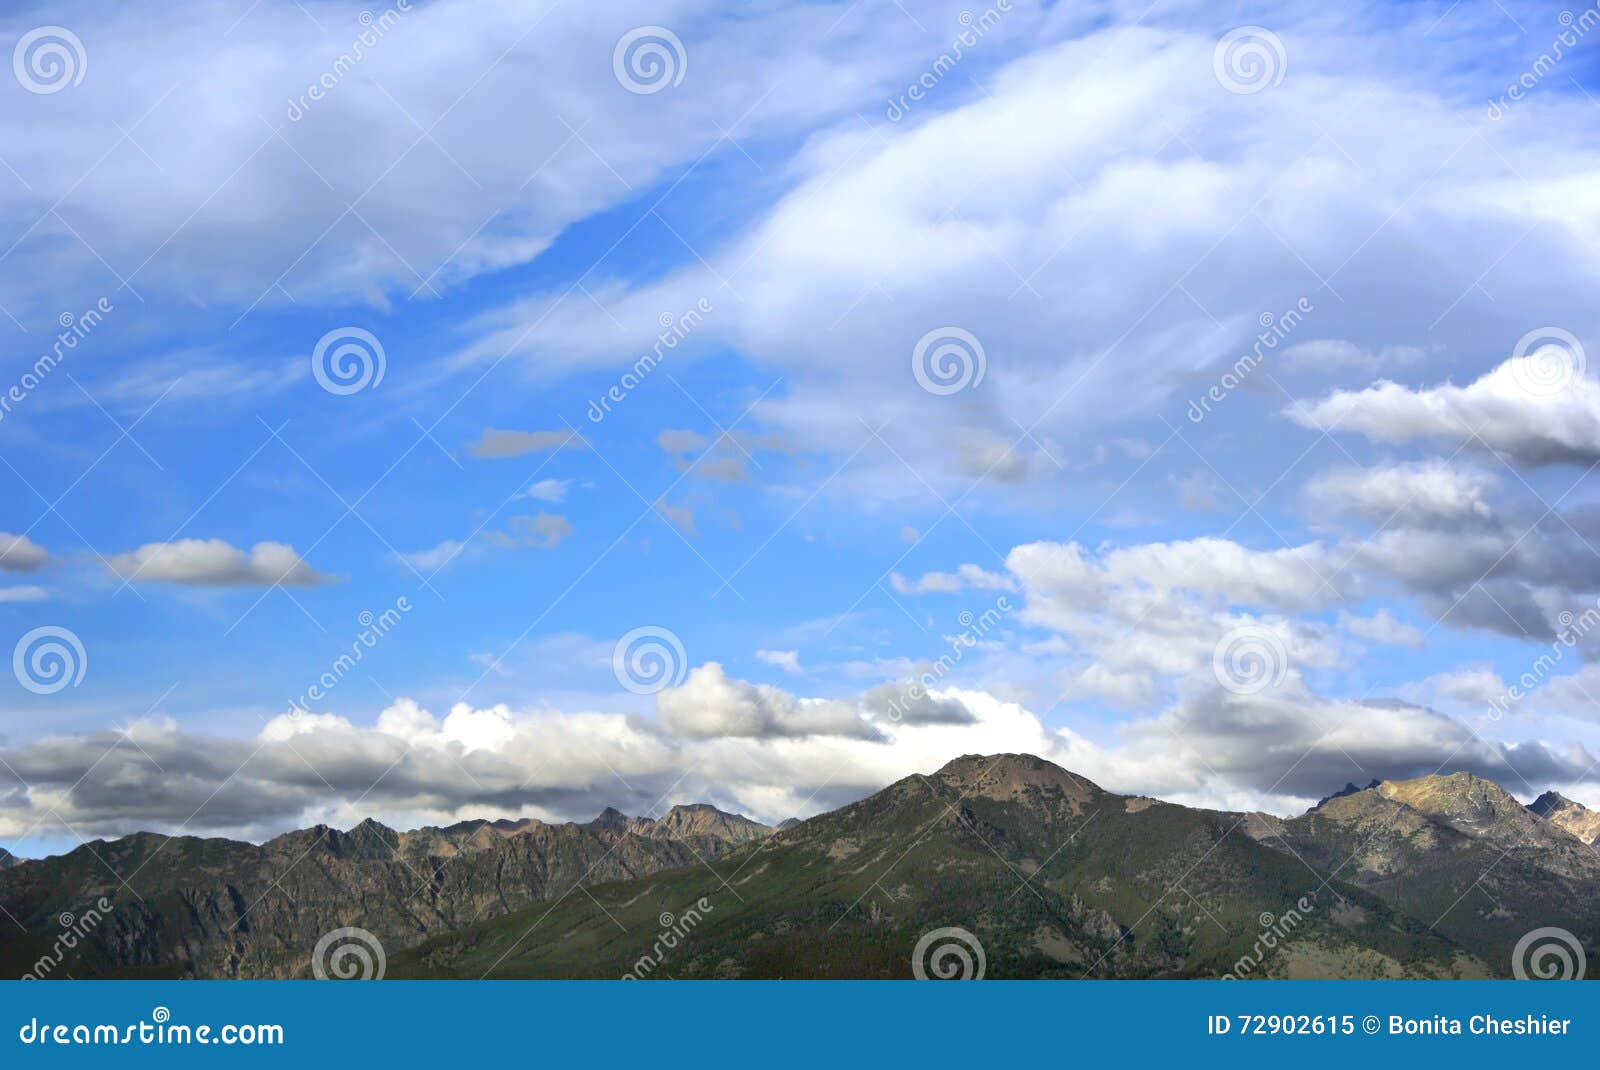 skyline of absaroka mountains